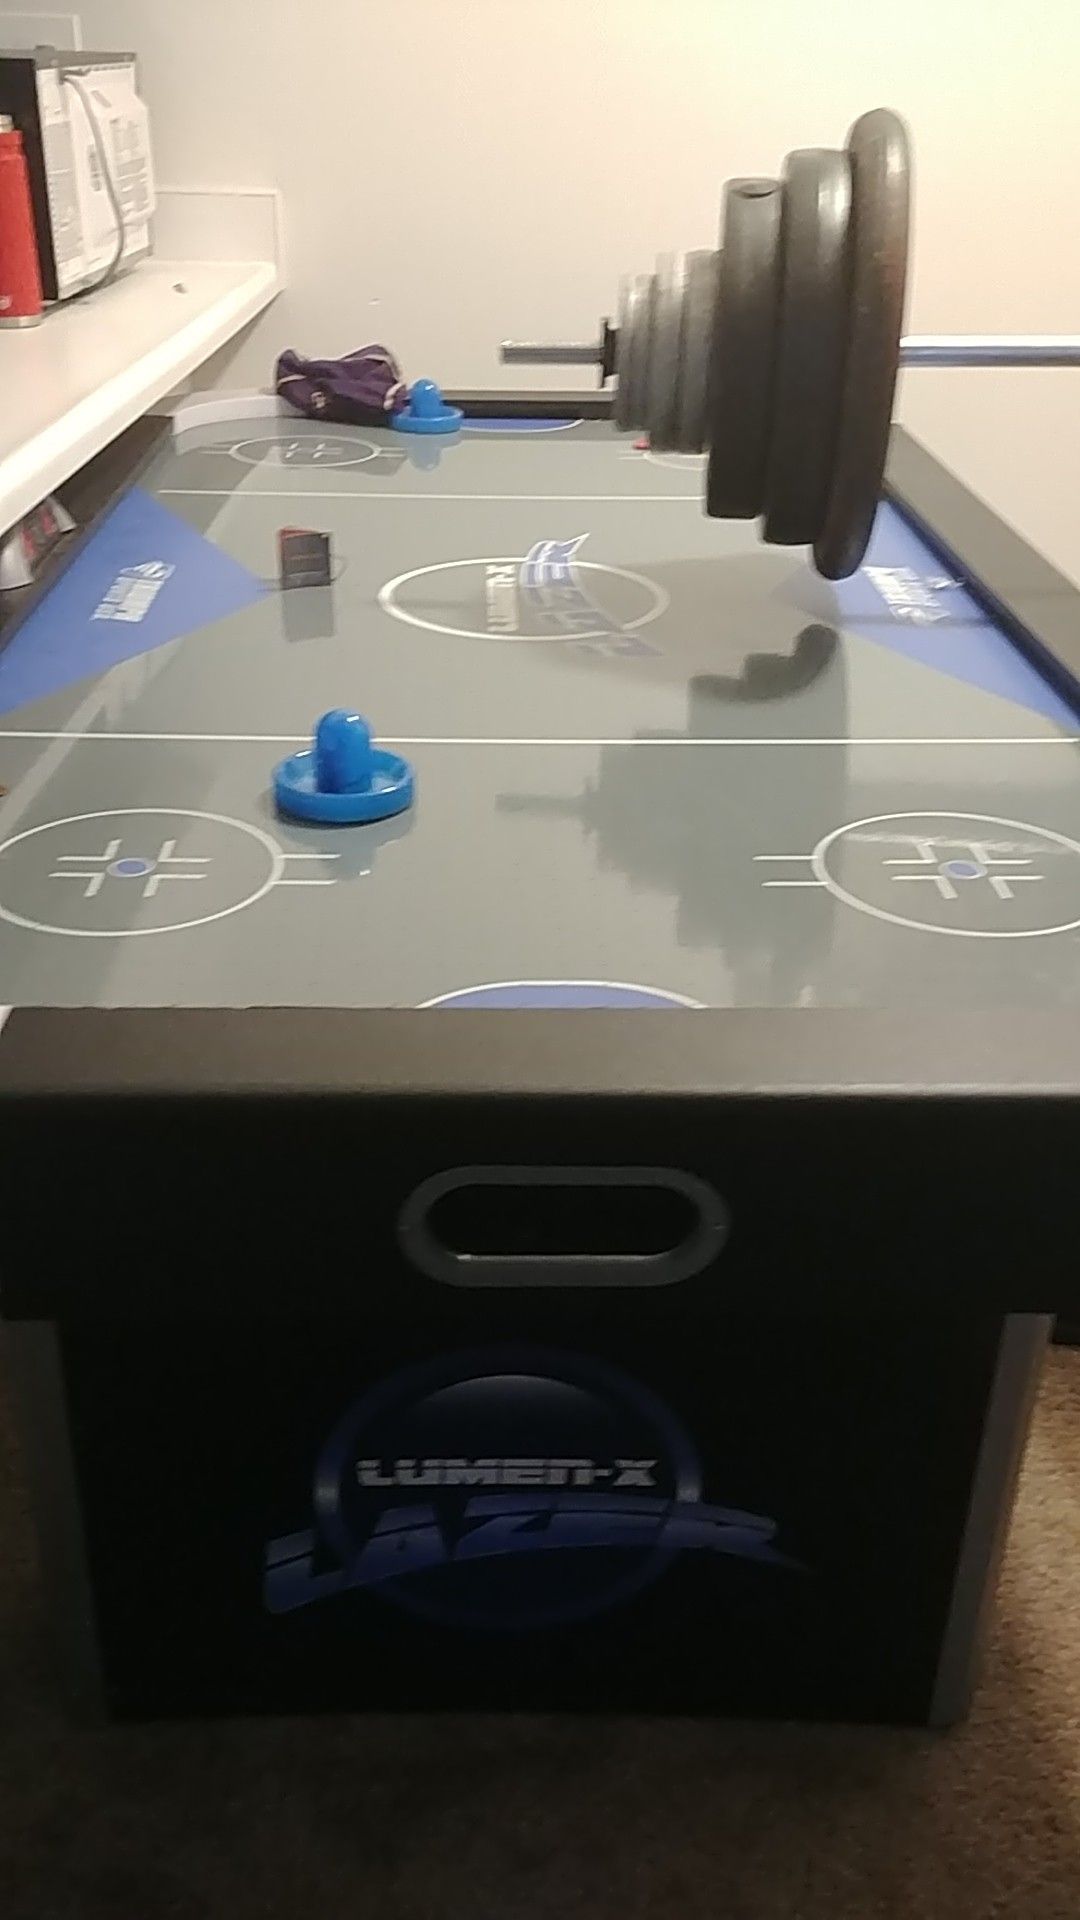 Lumen x laser air hockey table